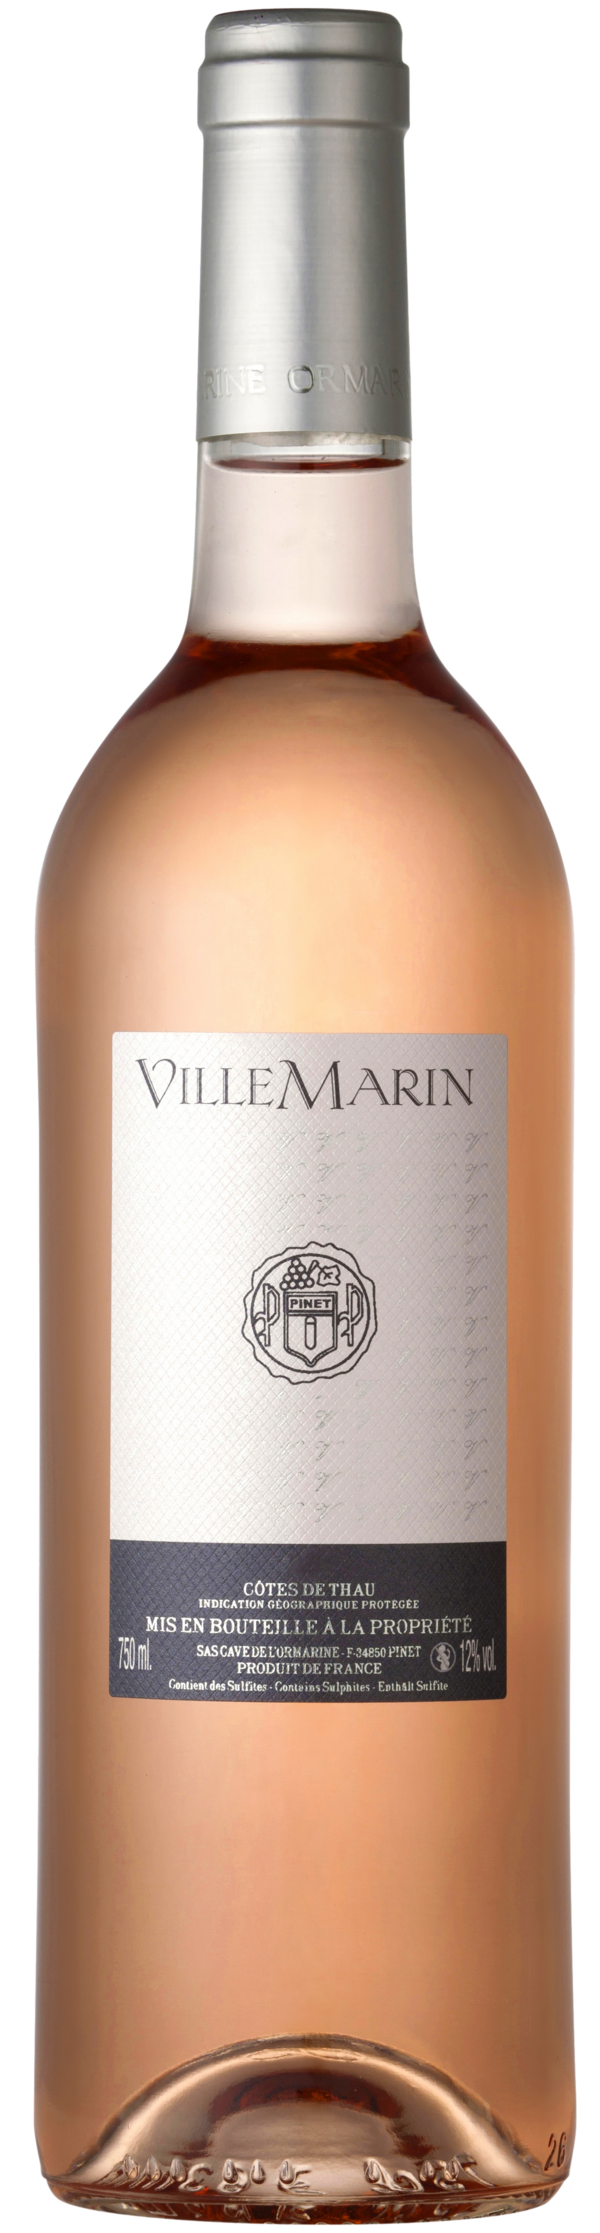 Villemarin - IGP Côtes de Thau - Rosé